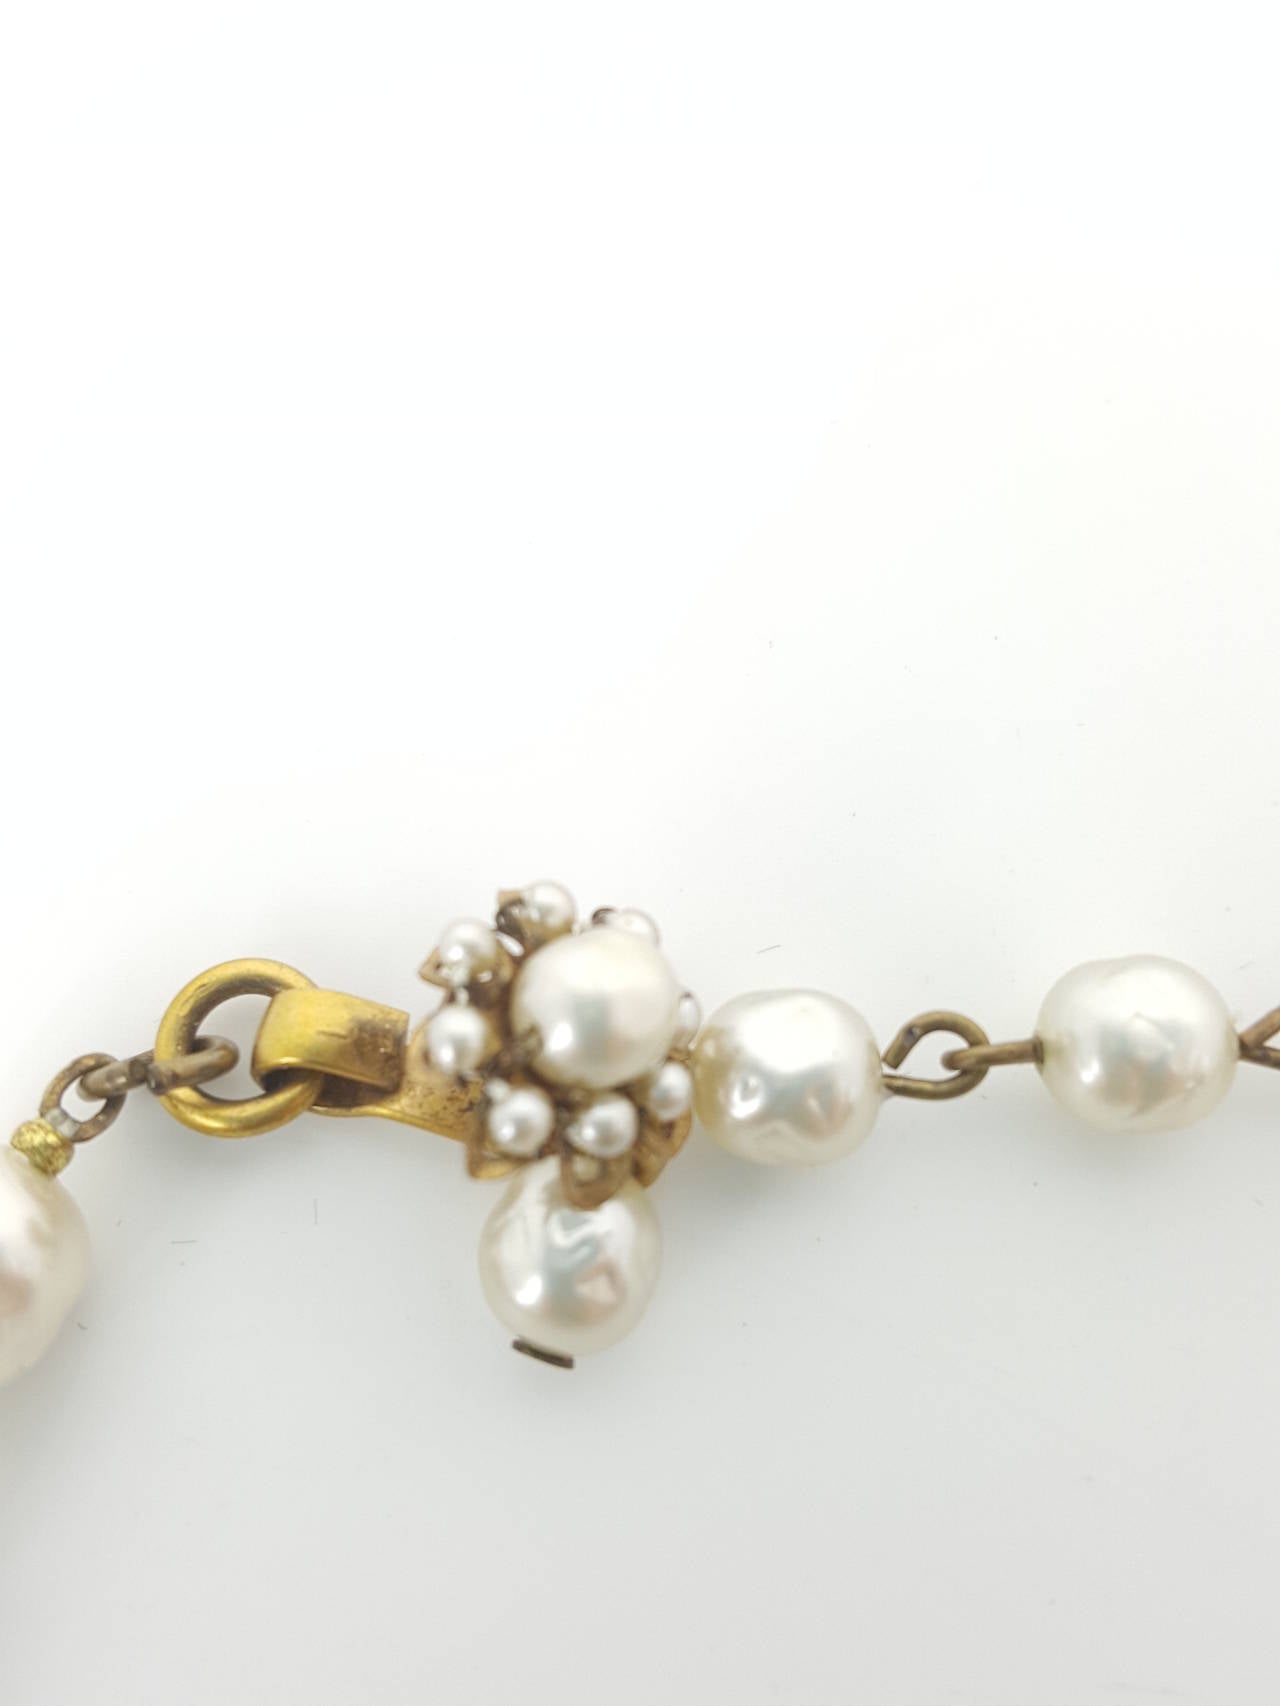 Women's Vintage Miriam Haskell Exquisite Pearl Bib Necklace.